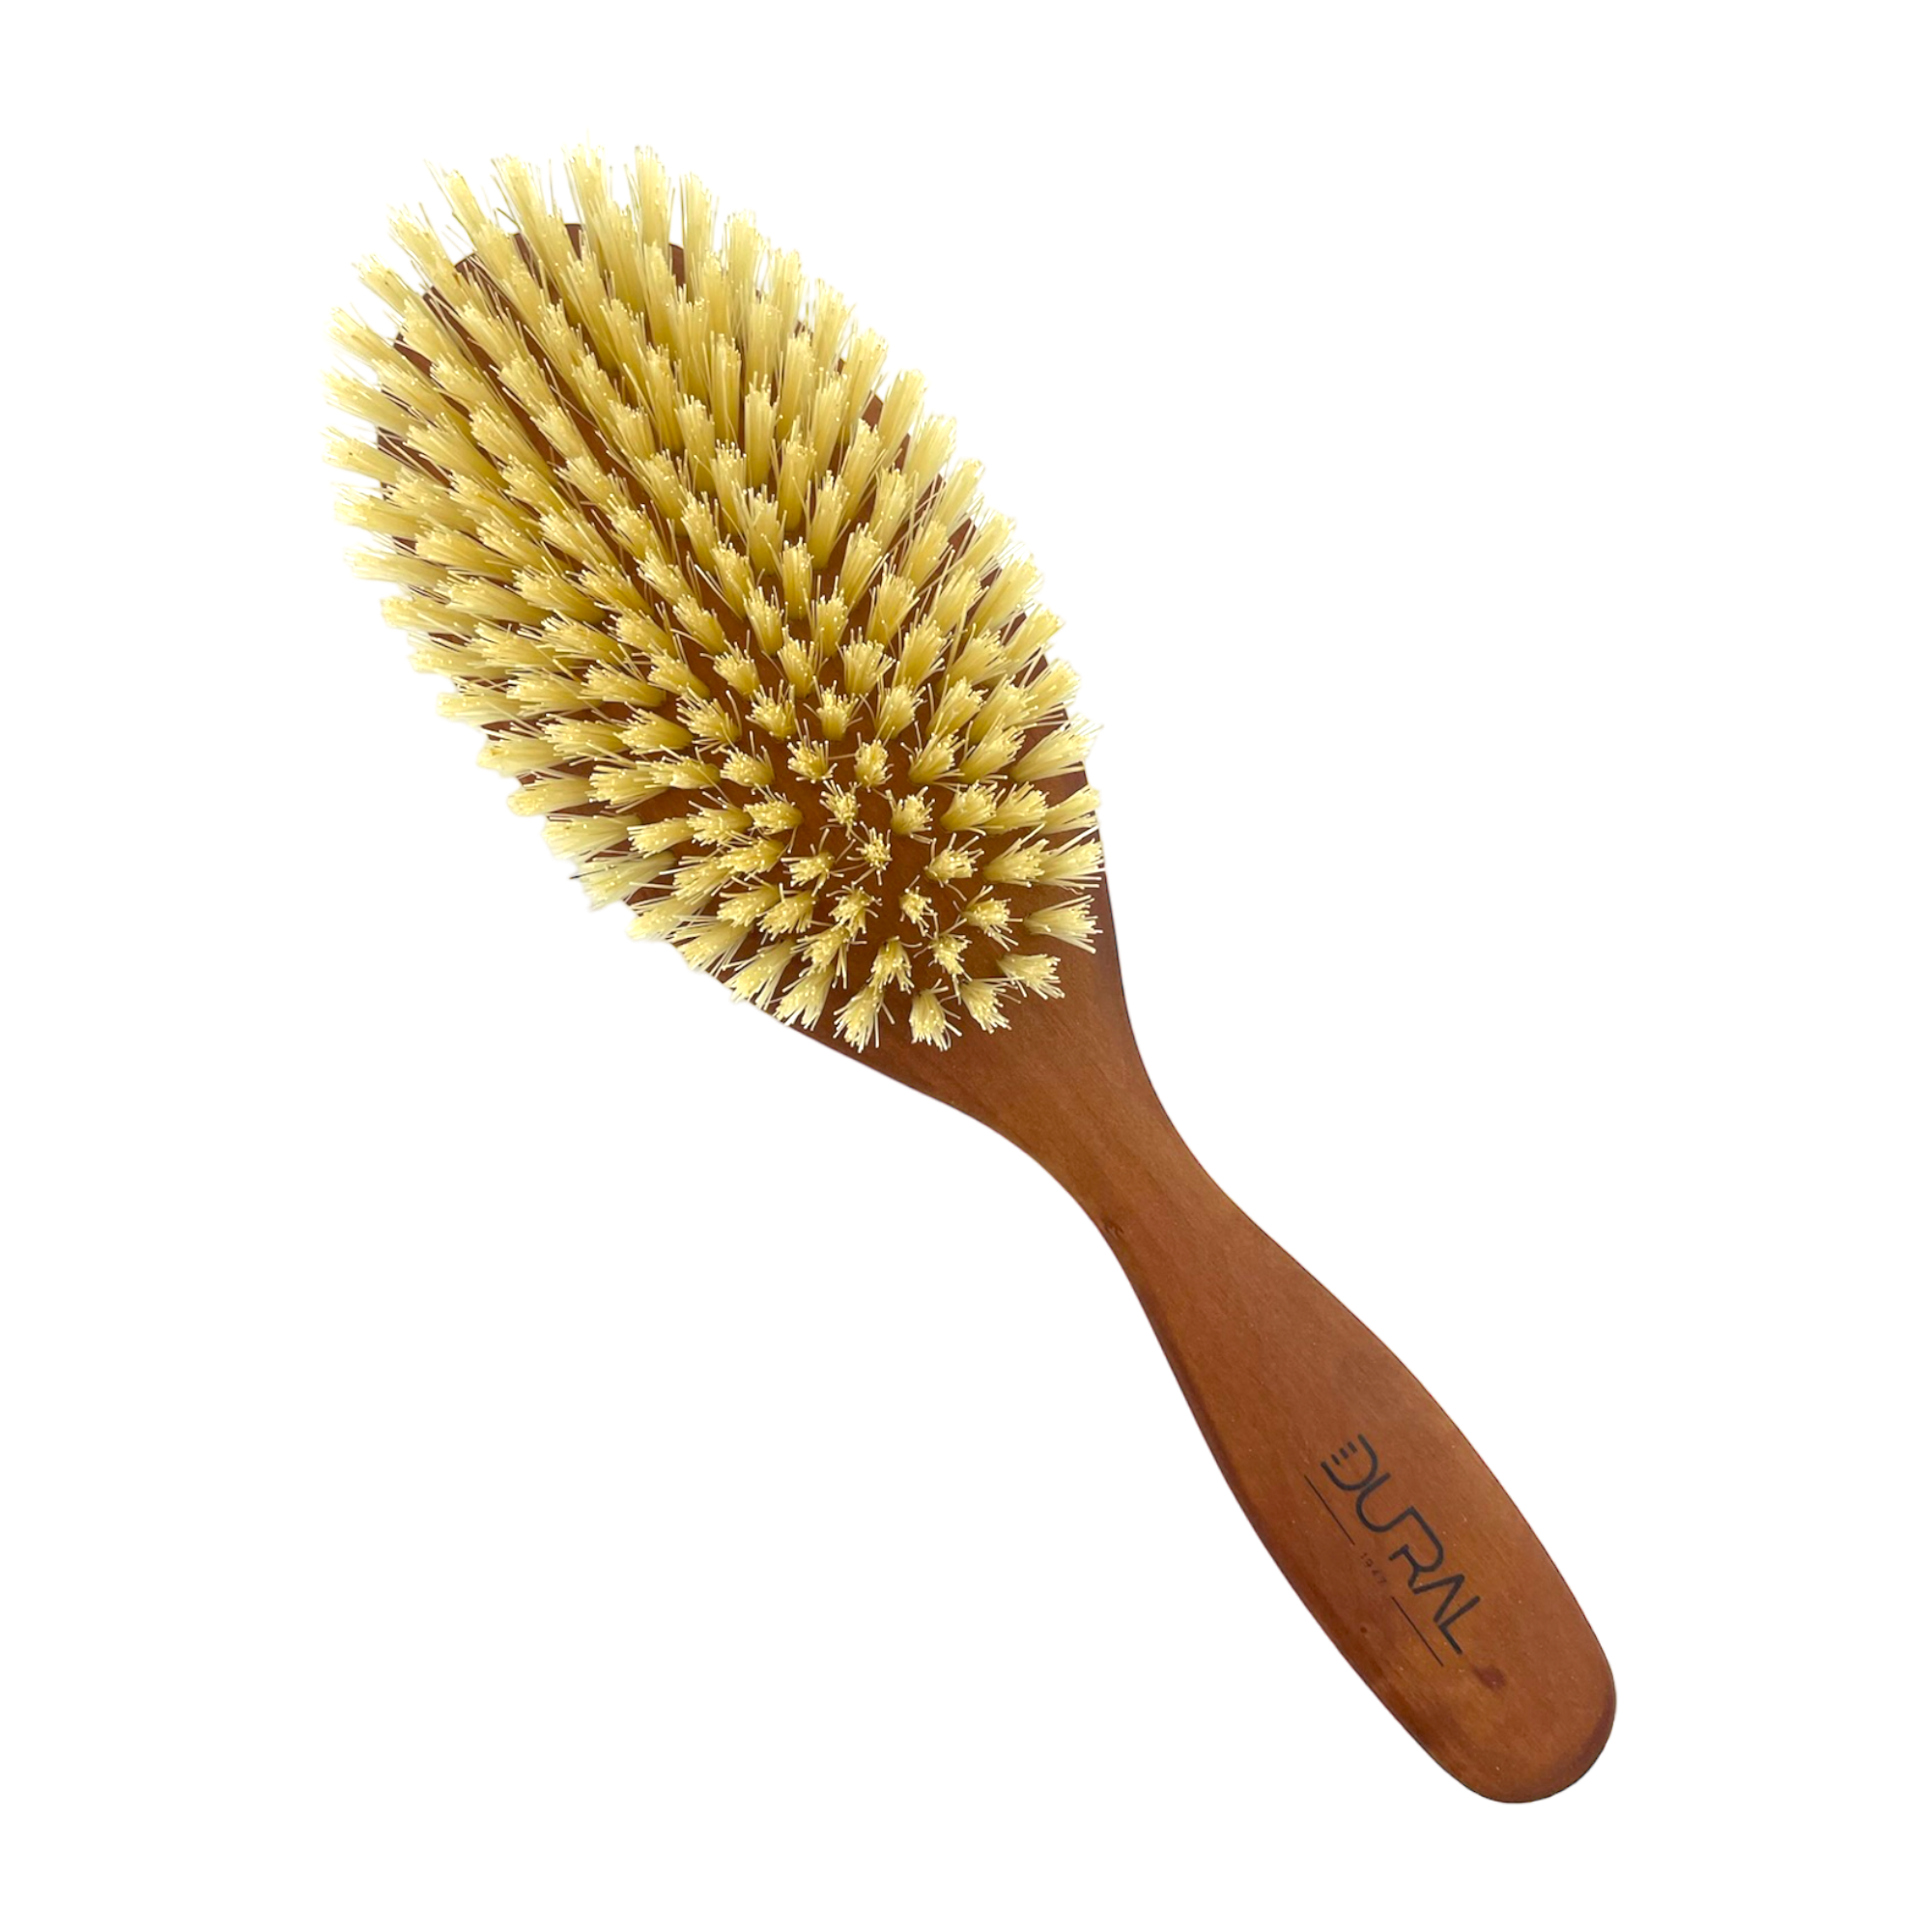 Dural Pear Wood hair brush with light natural bristles - 10 rows